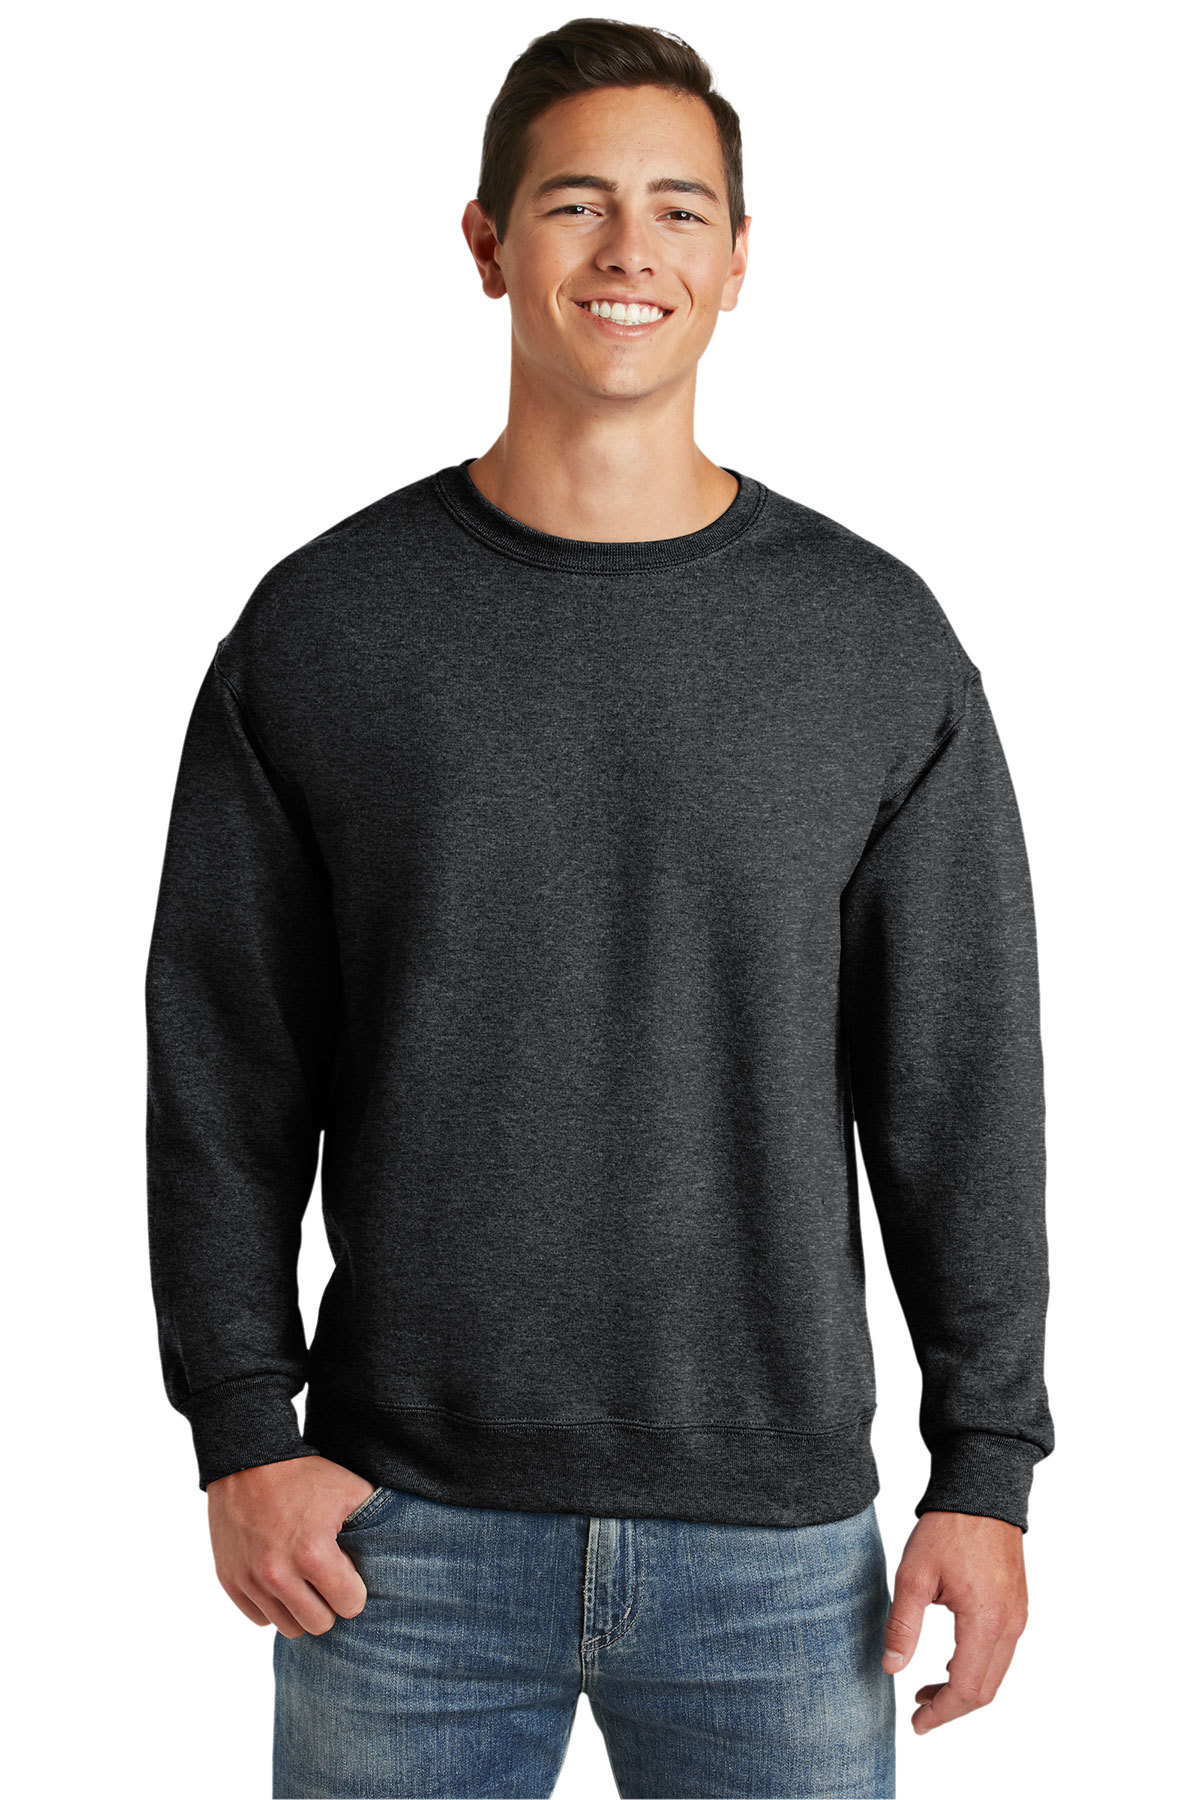 | NuBlend Jerzees Sweats Crewneck Sweatshirt | Product - SanMar Super